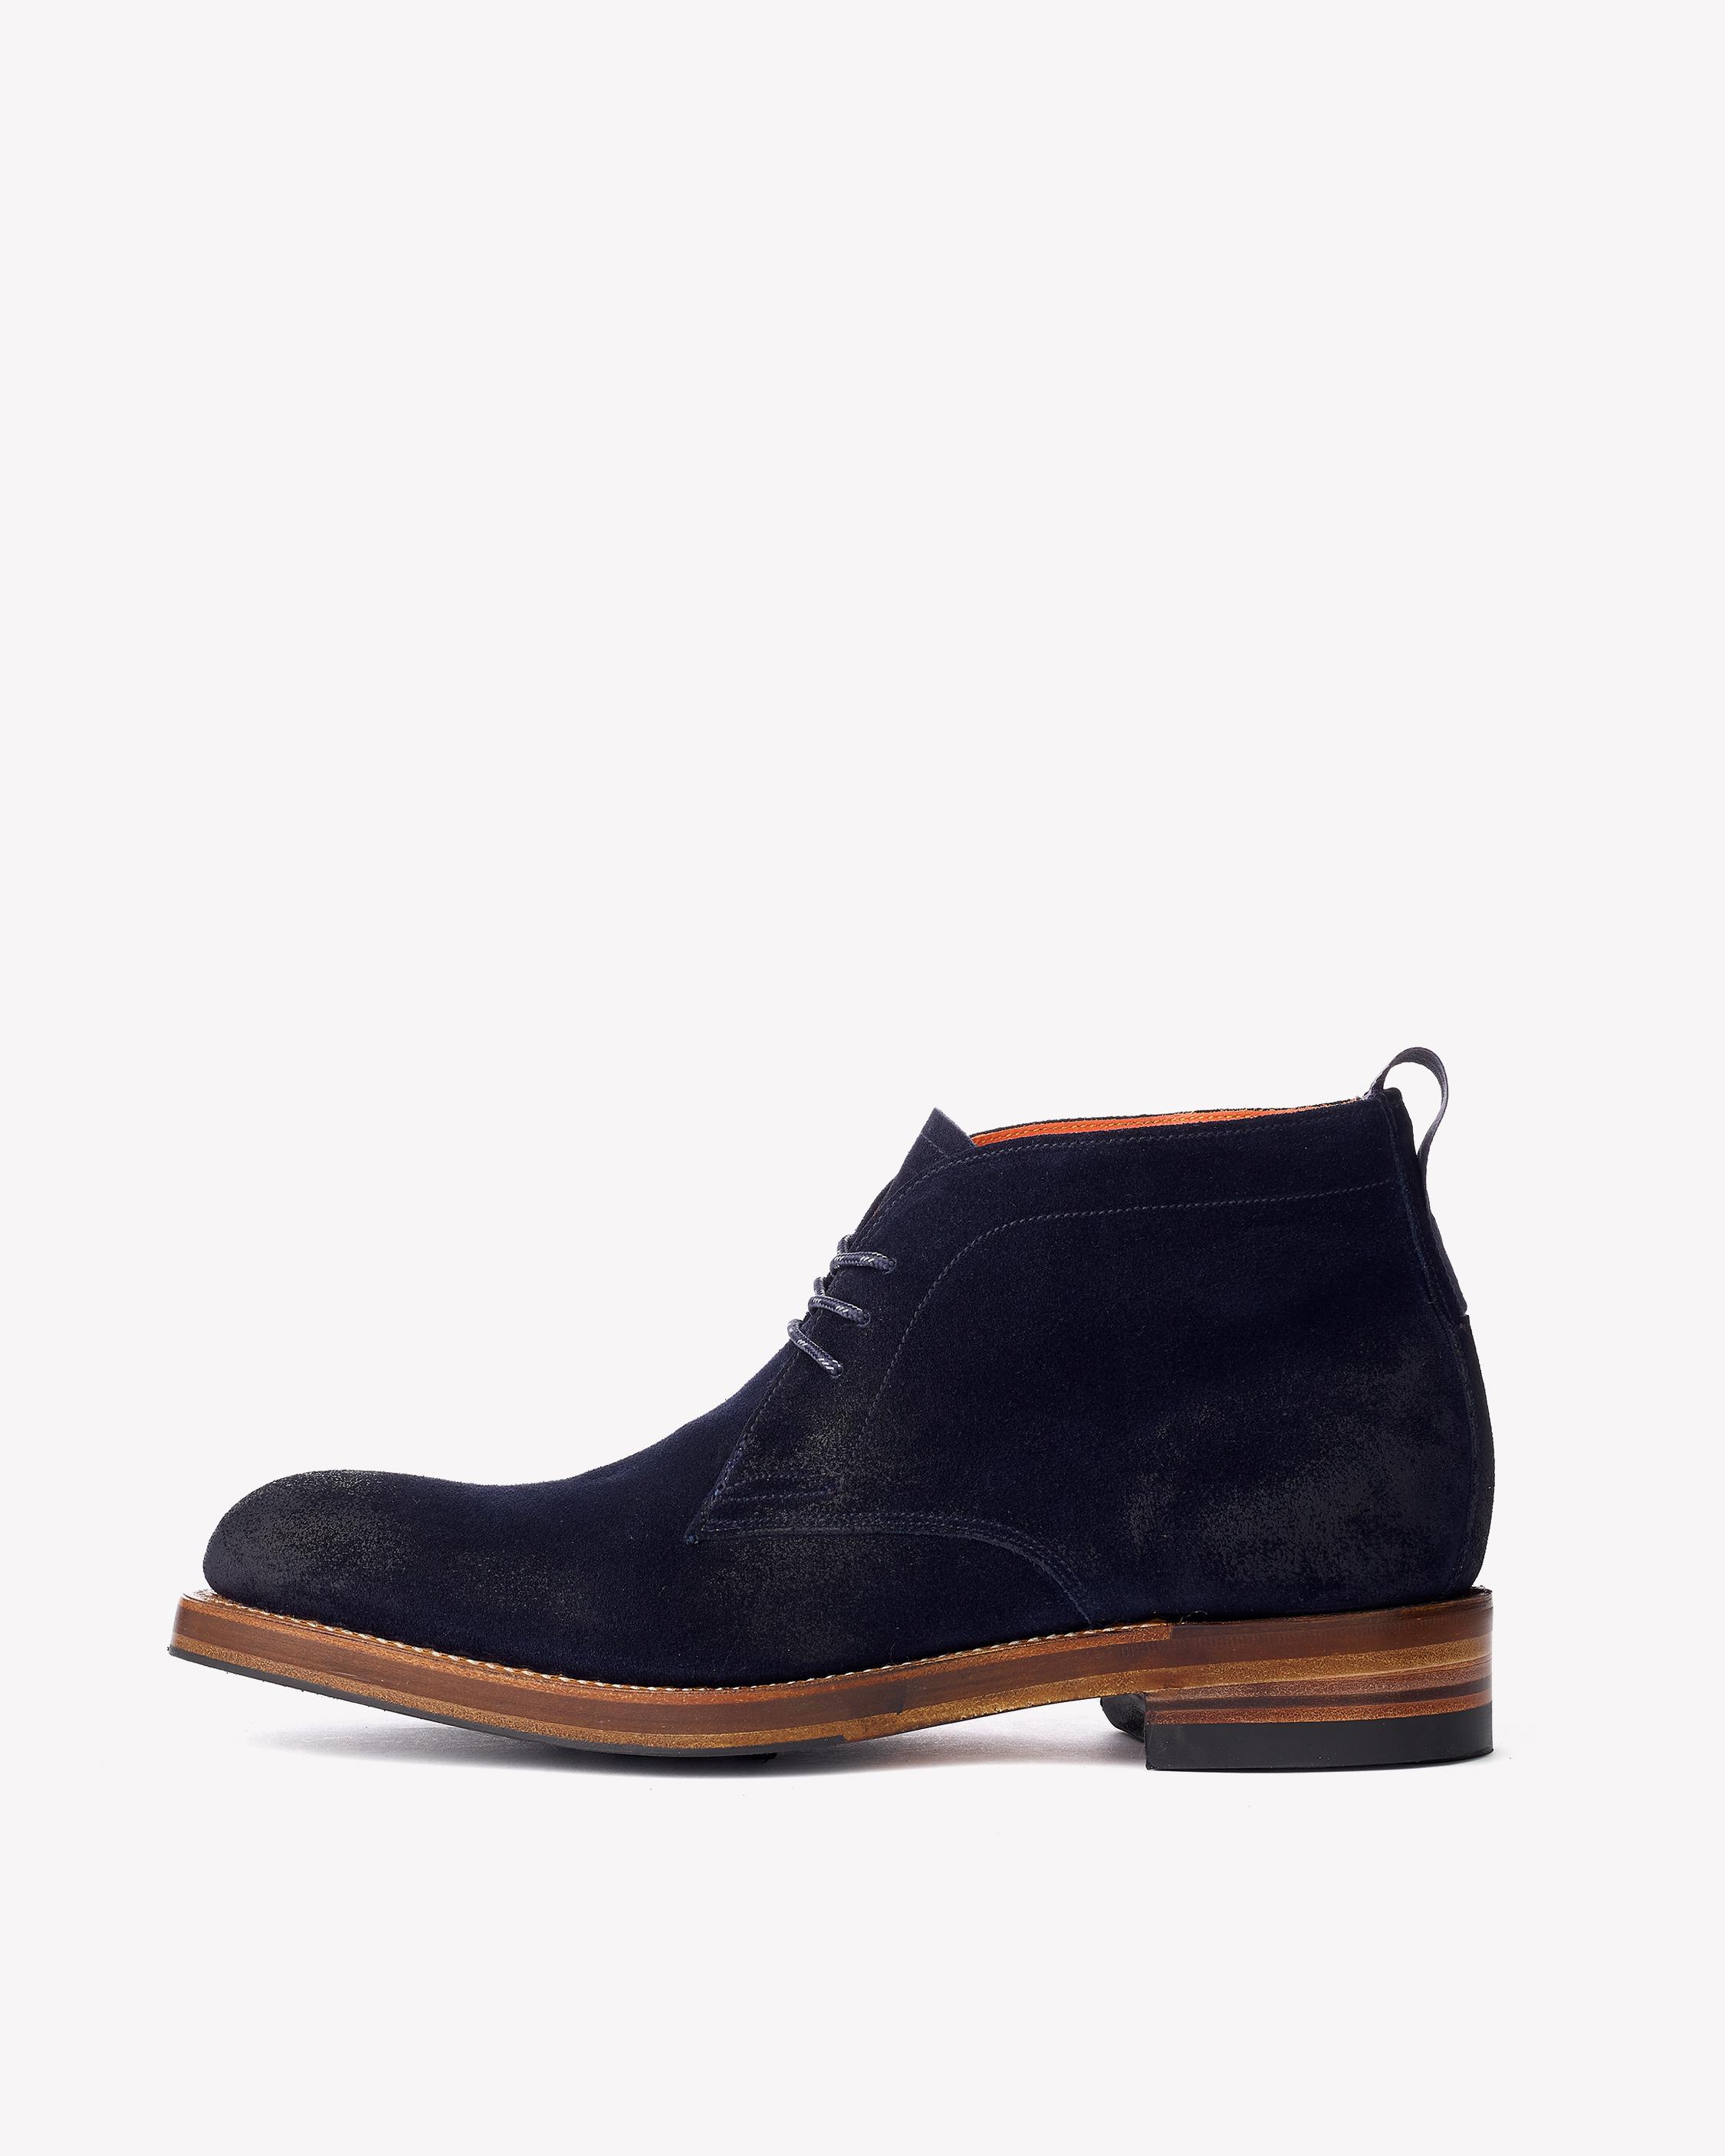 Men's Designer Shoes in Leather, Suede & Wool | rag & bone